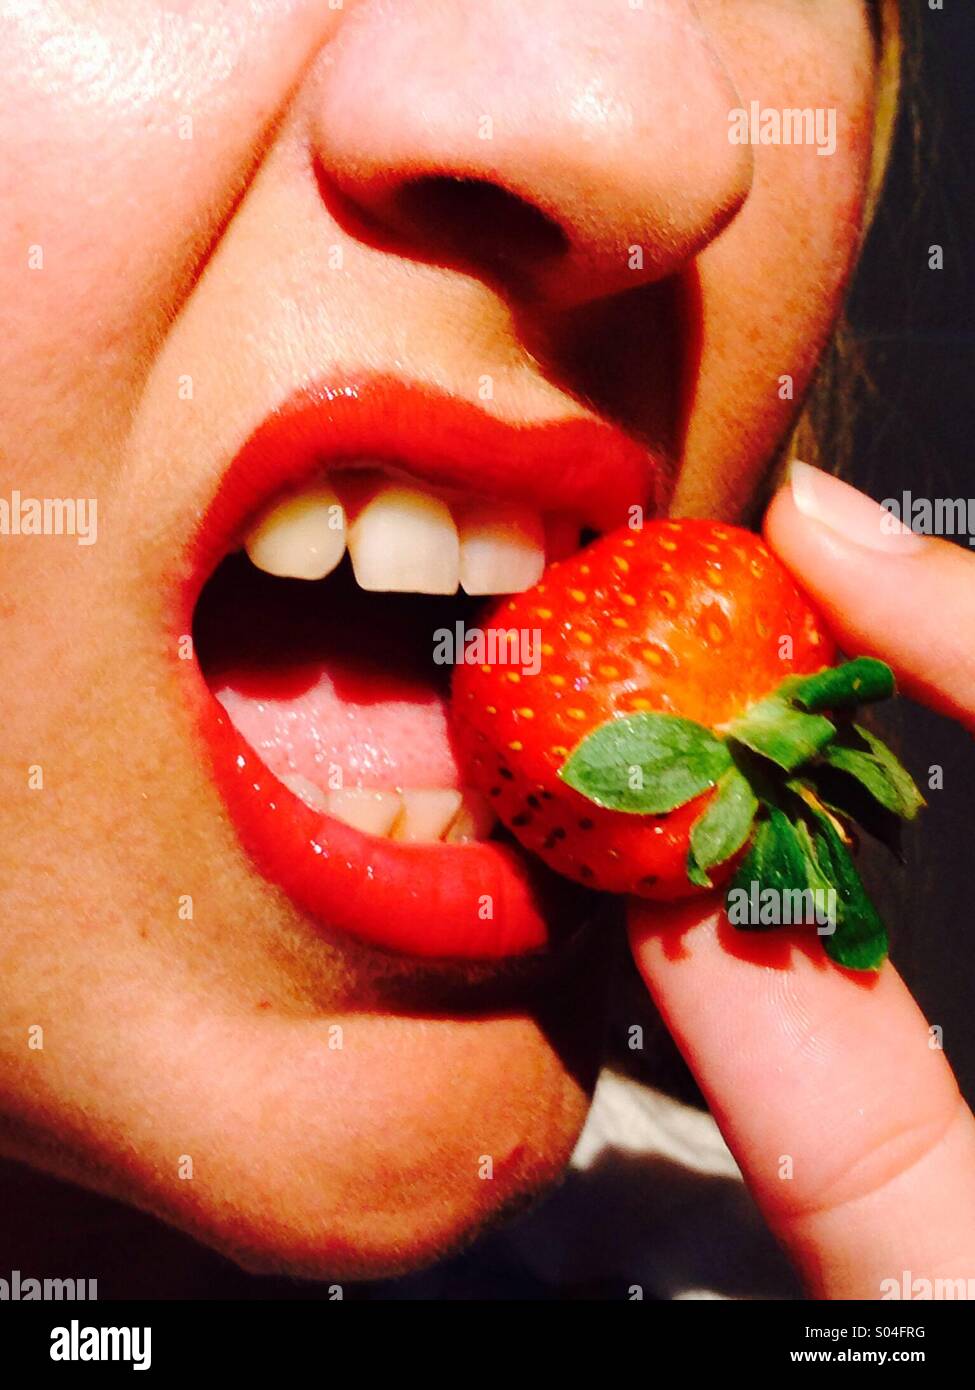 Strawberry being bitten between red lips Stock Photo